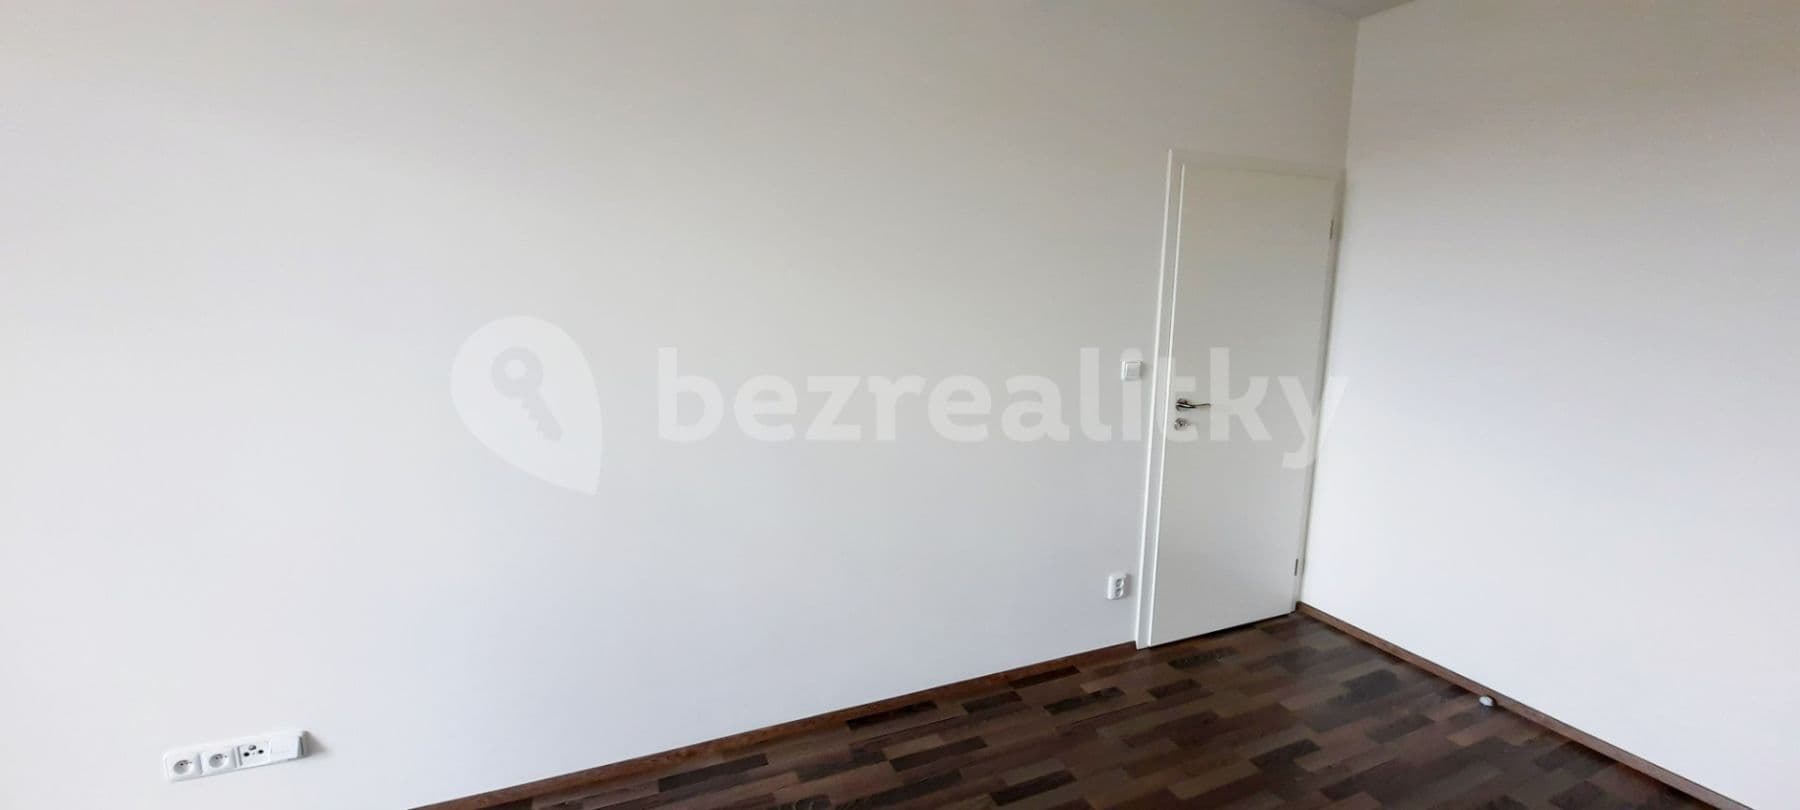 2 bedroom with open-plan kitchen flat for sale, 102 m², Geologická, Prague, Prague